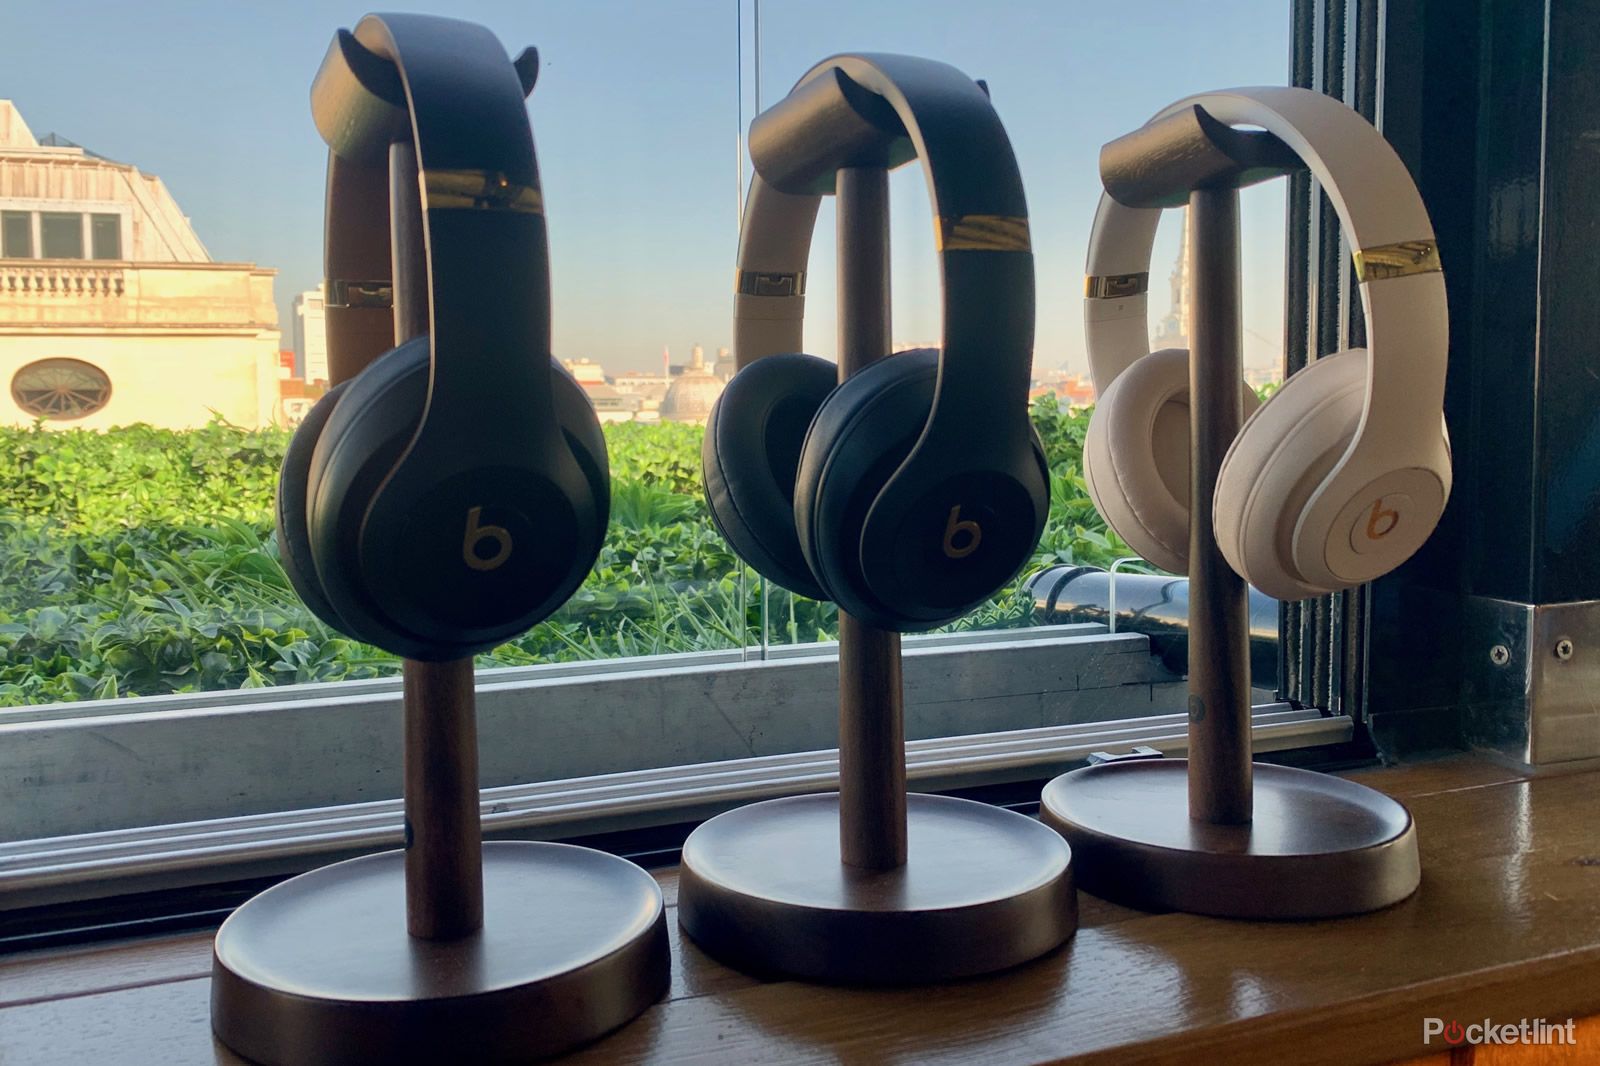 Beats Skyline Collection adds luxury to Studio3 Wireless range